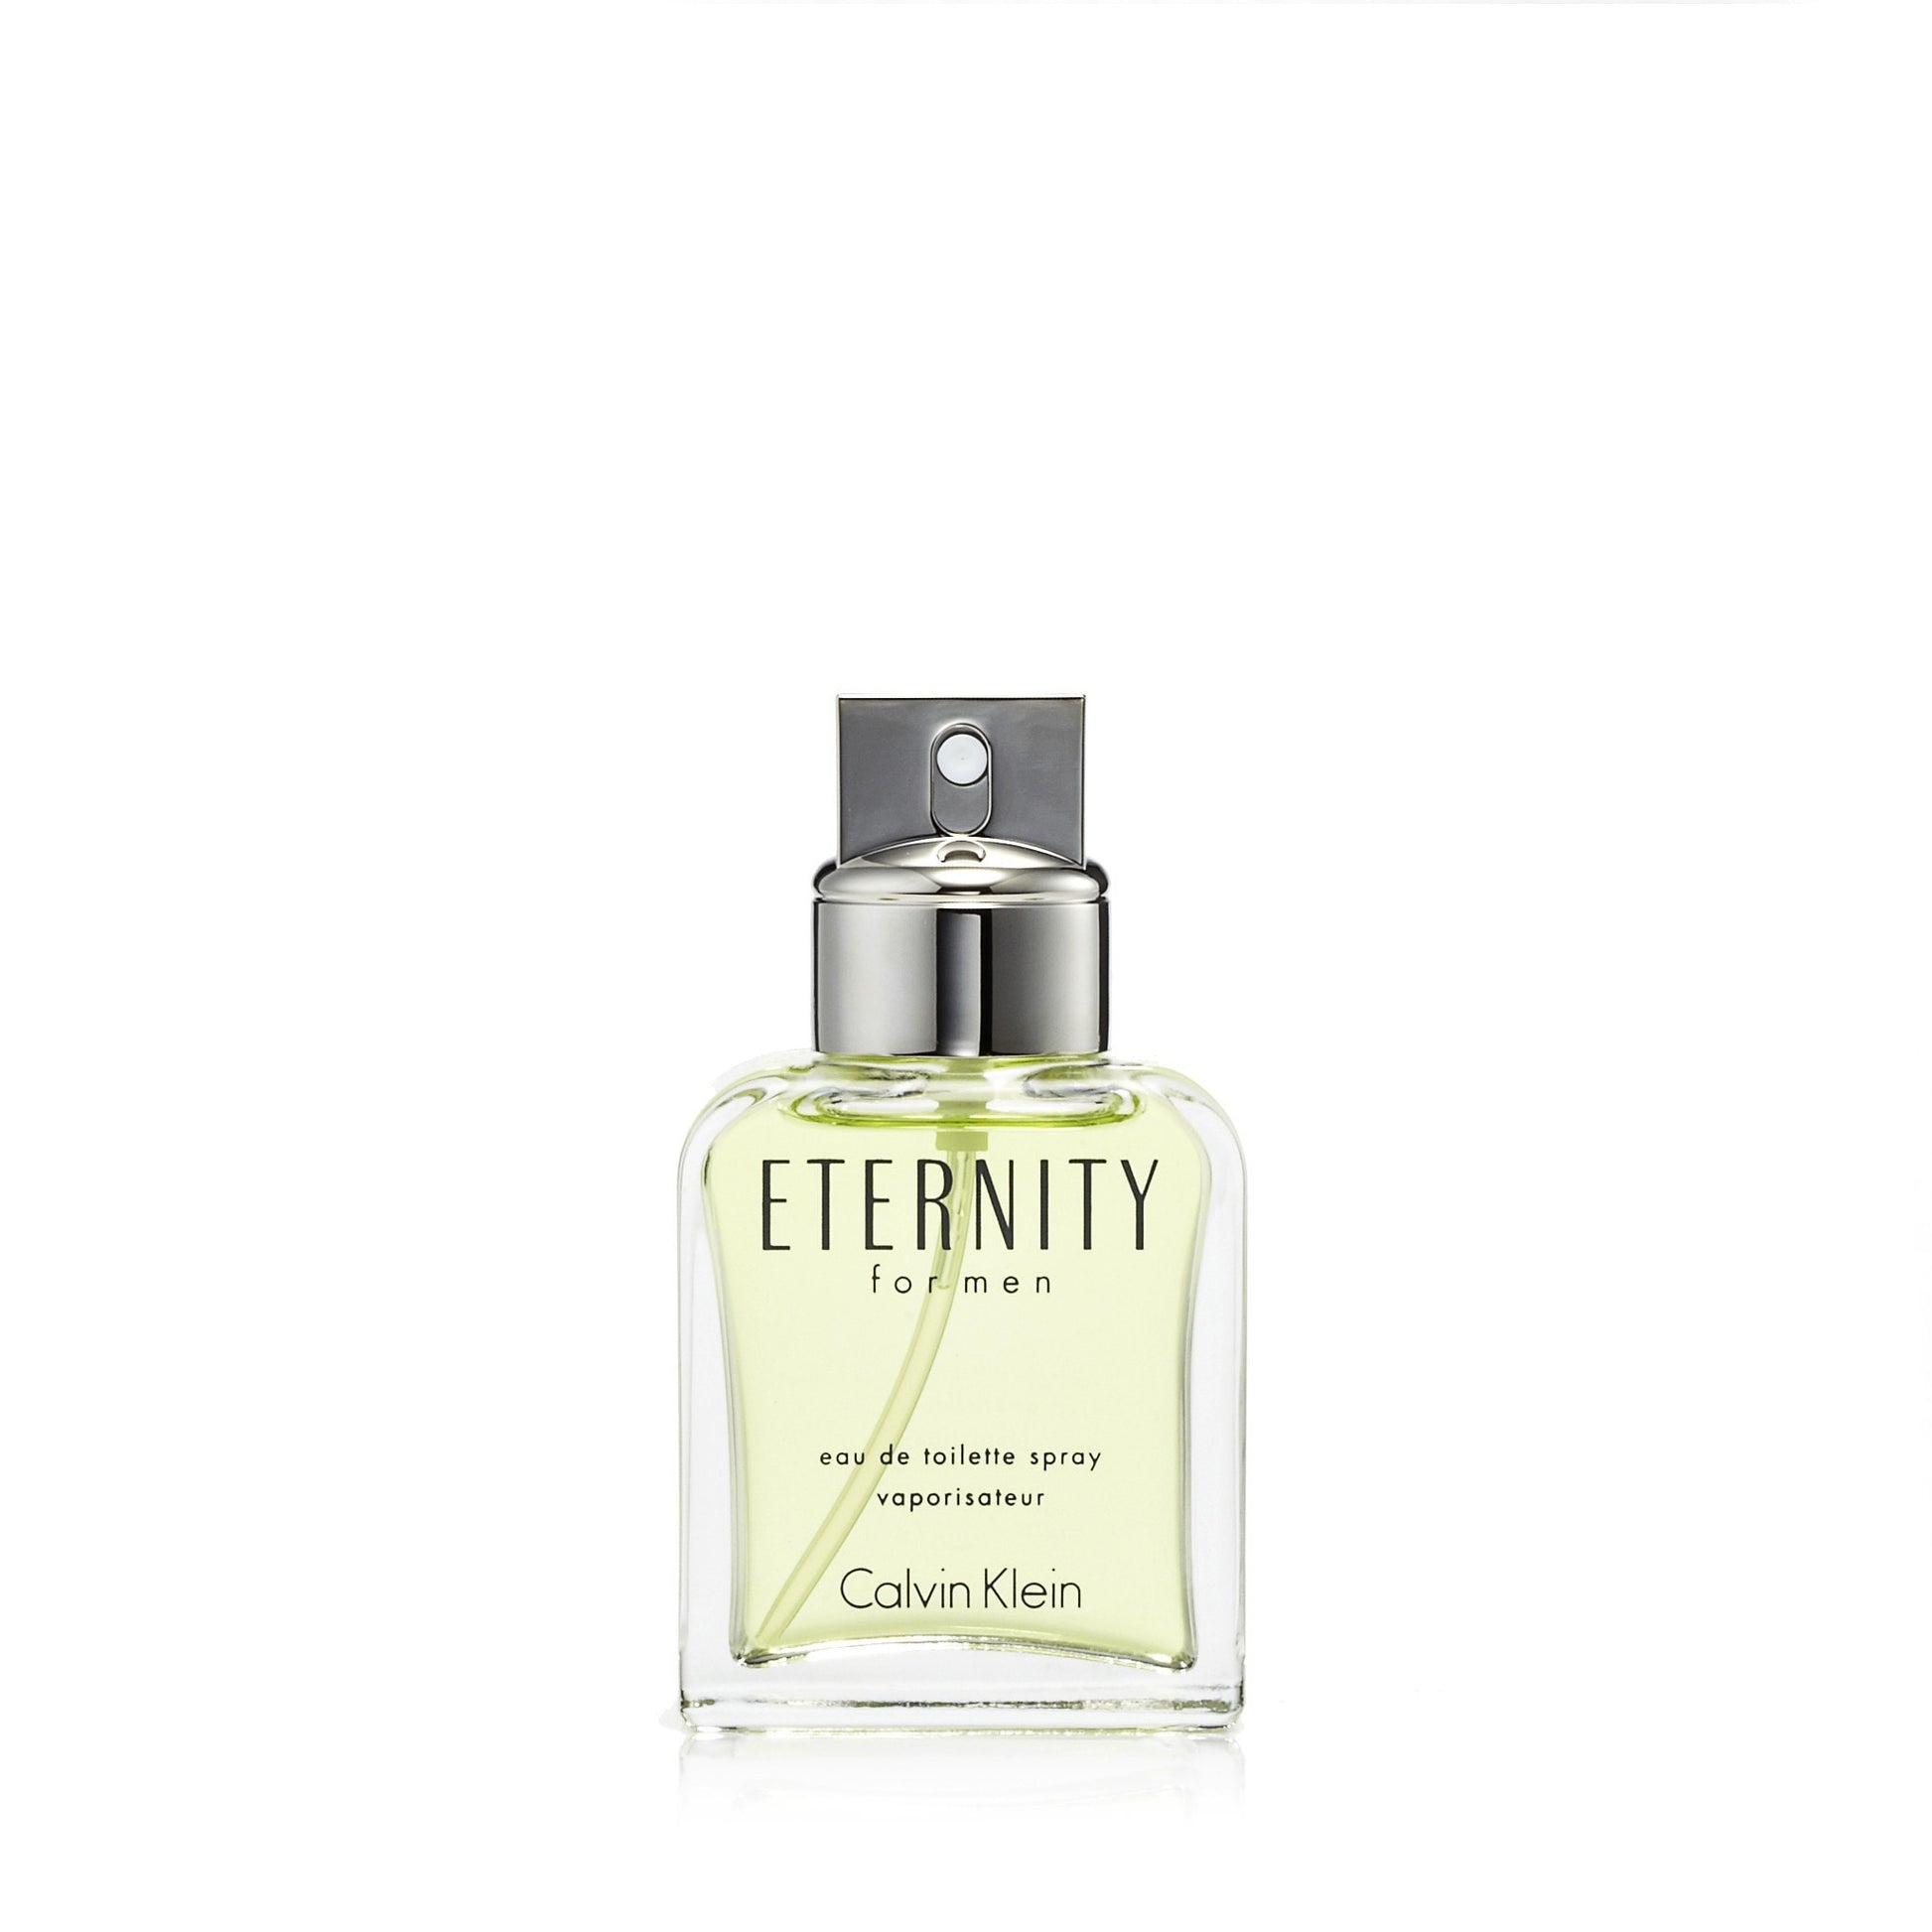 Eternity Eau de Toilette Spray for Men by Calvin Klein 1.7 oz. Click to open in modal